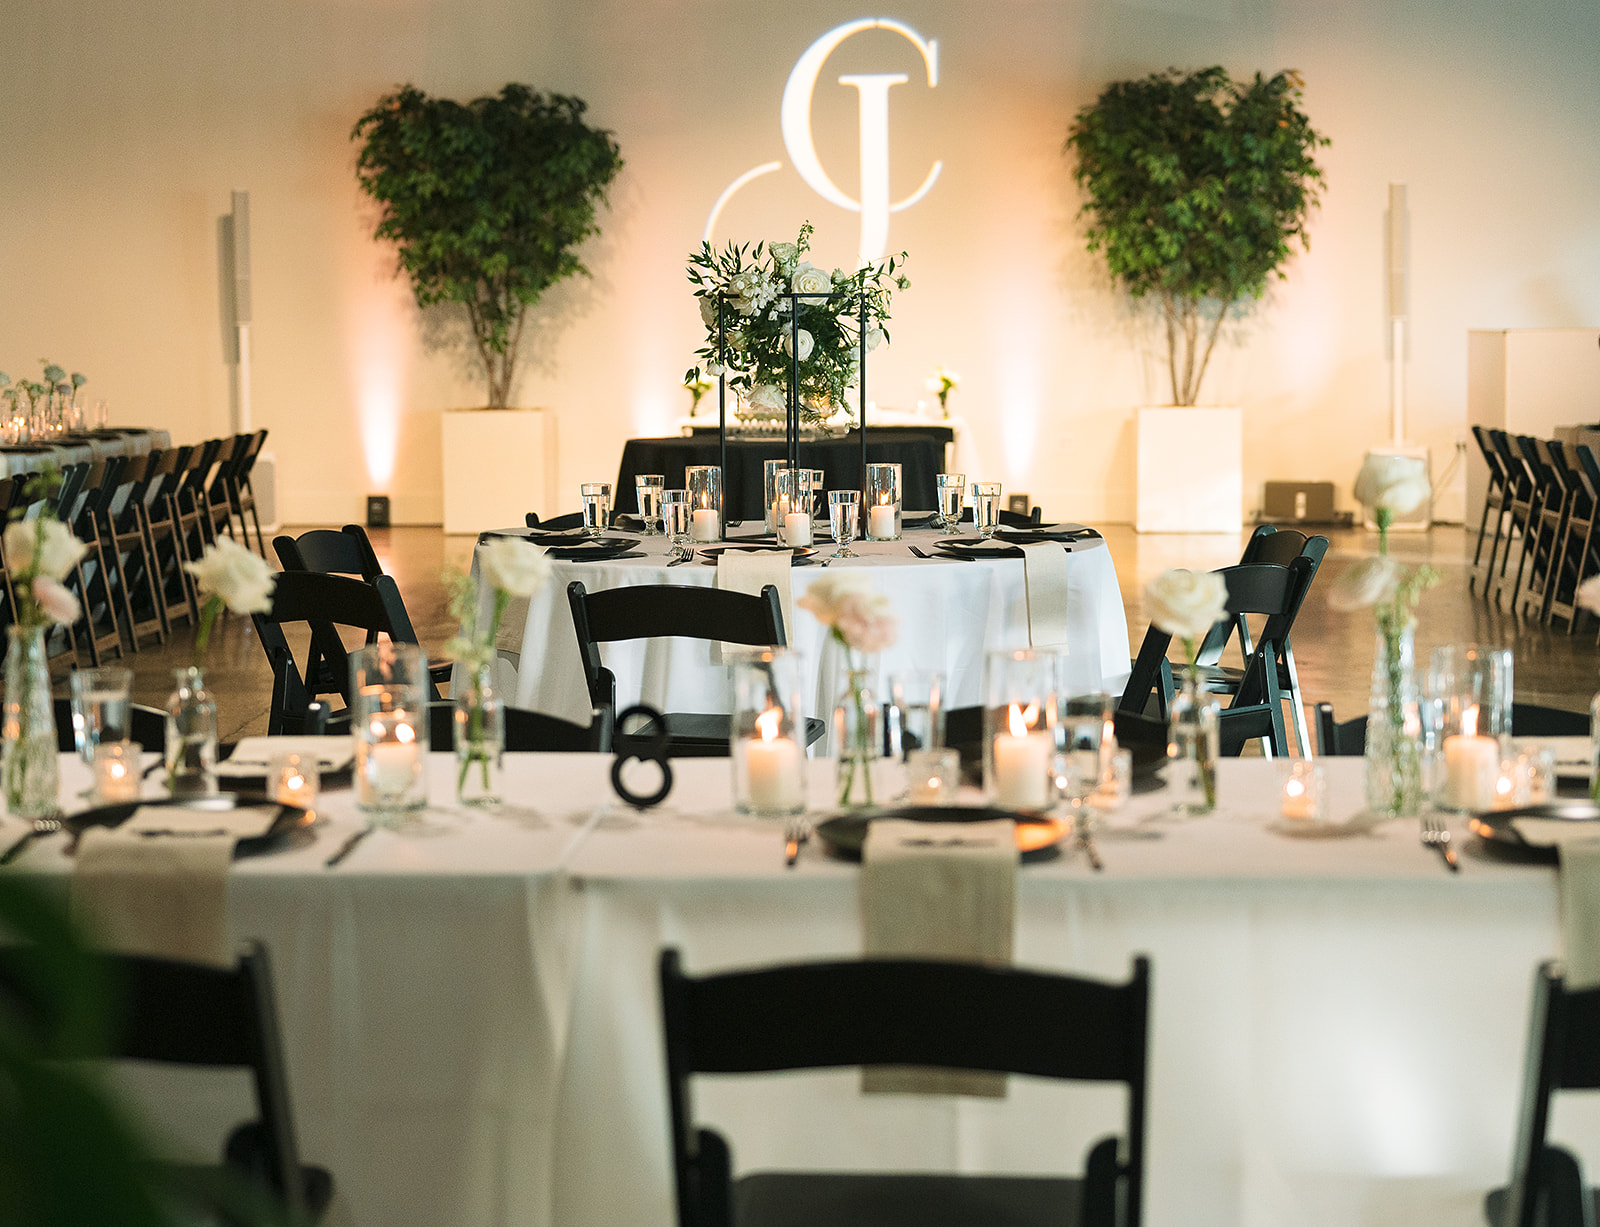 Saint Elle Wedding venue reception area setup with black chairs and white linens